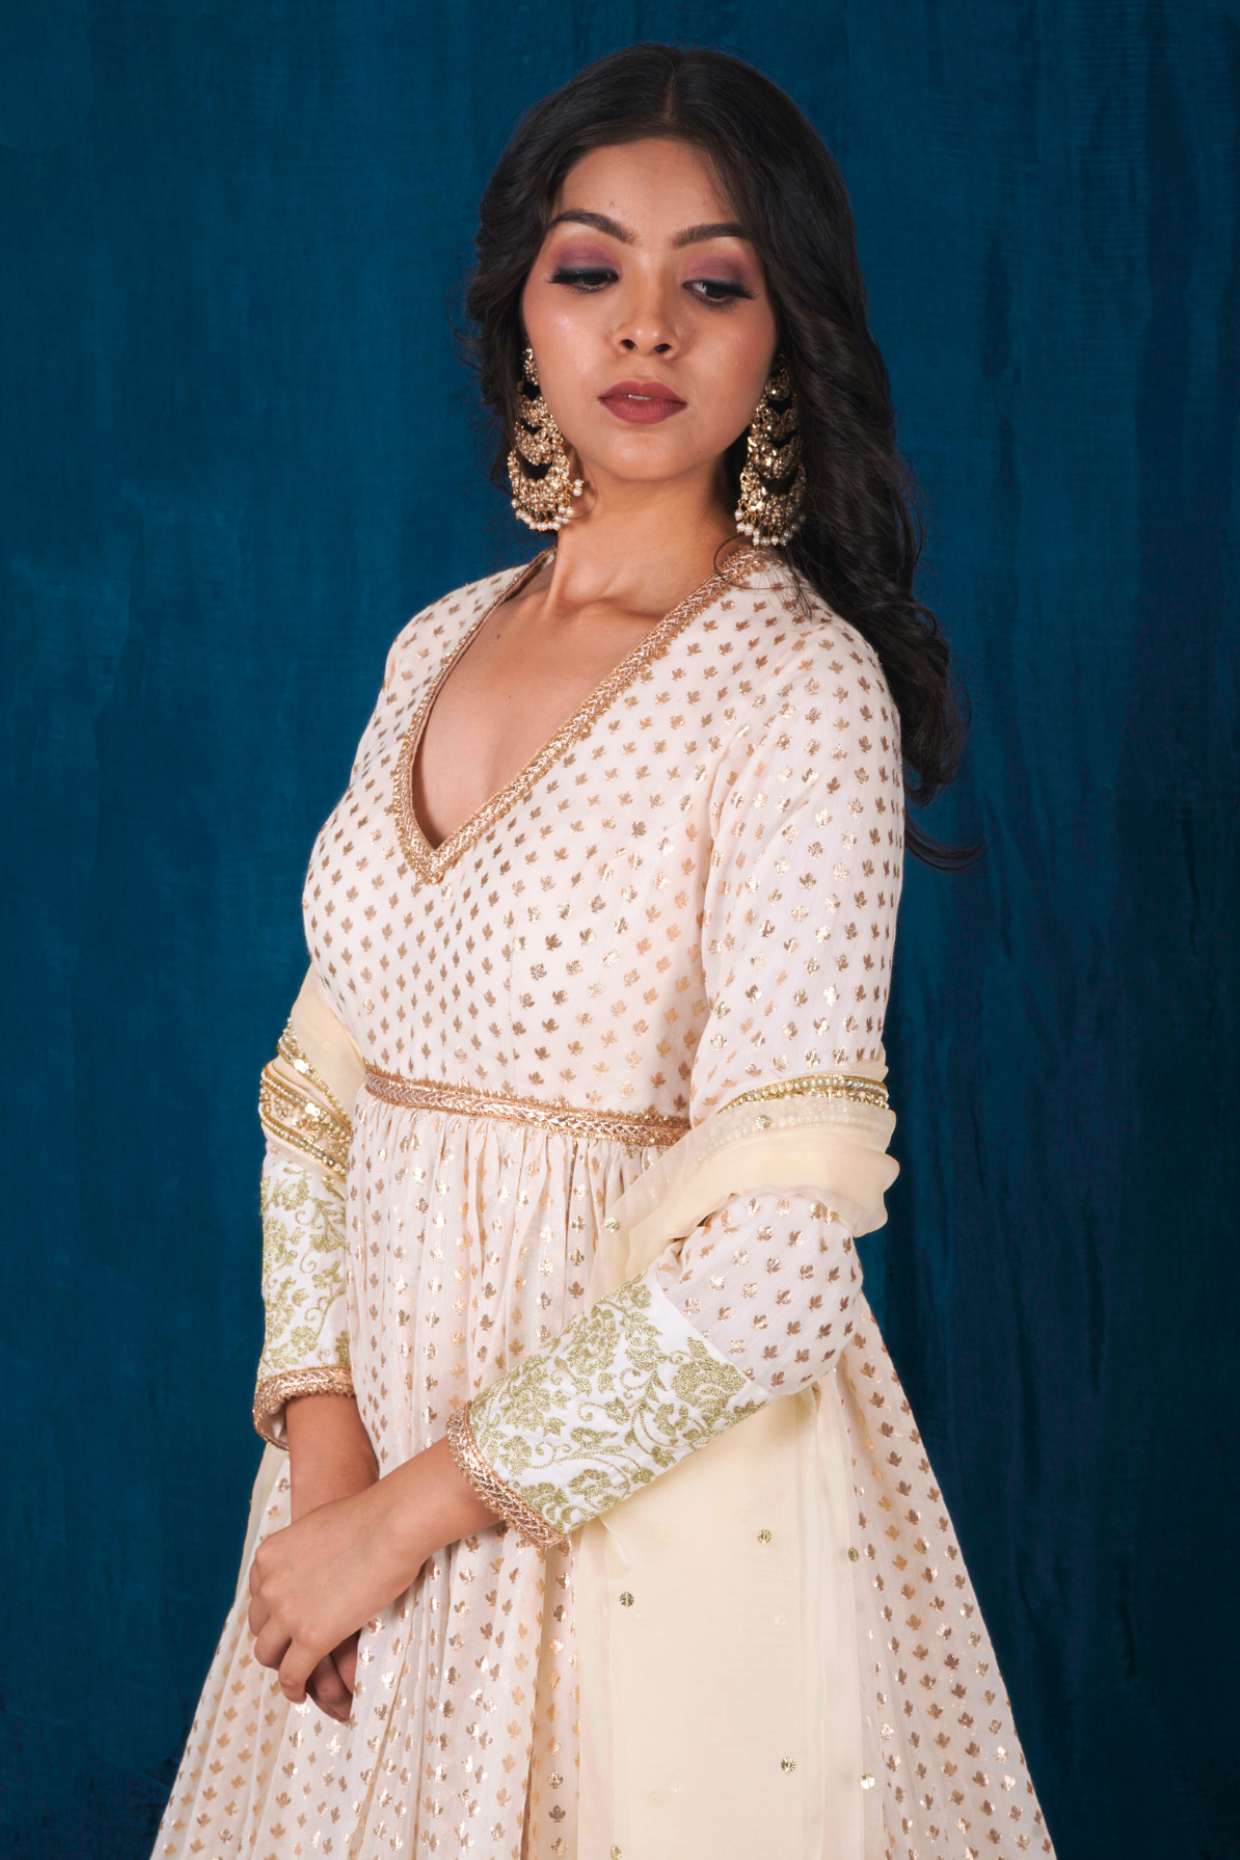 Off-White and Gold Banarasi Chanderi Anarkali Set with Skirt